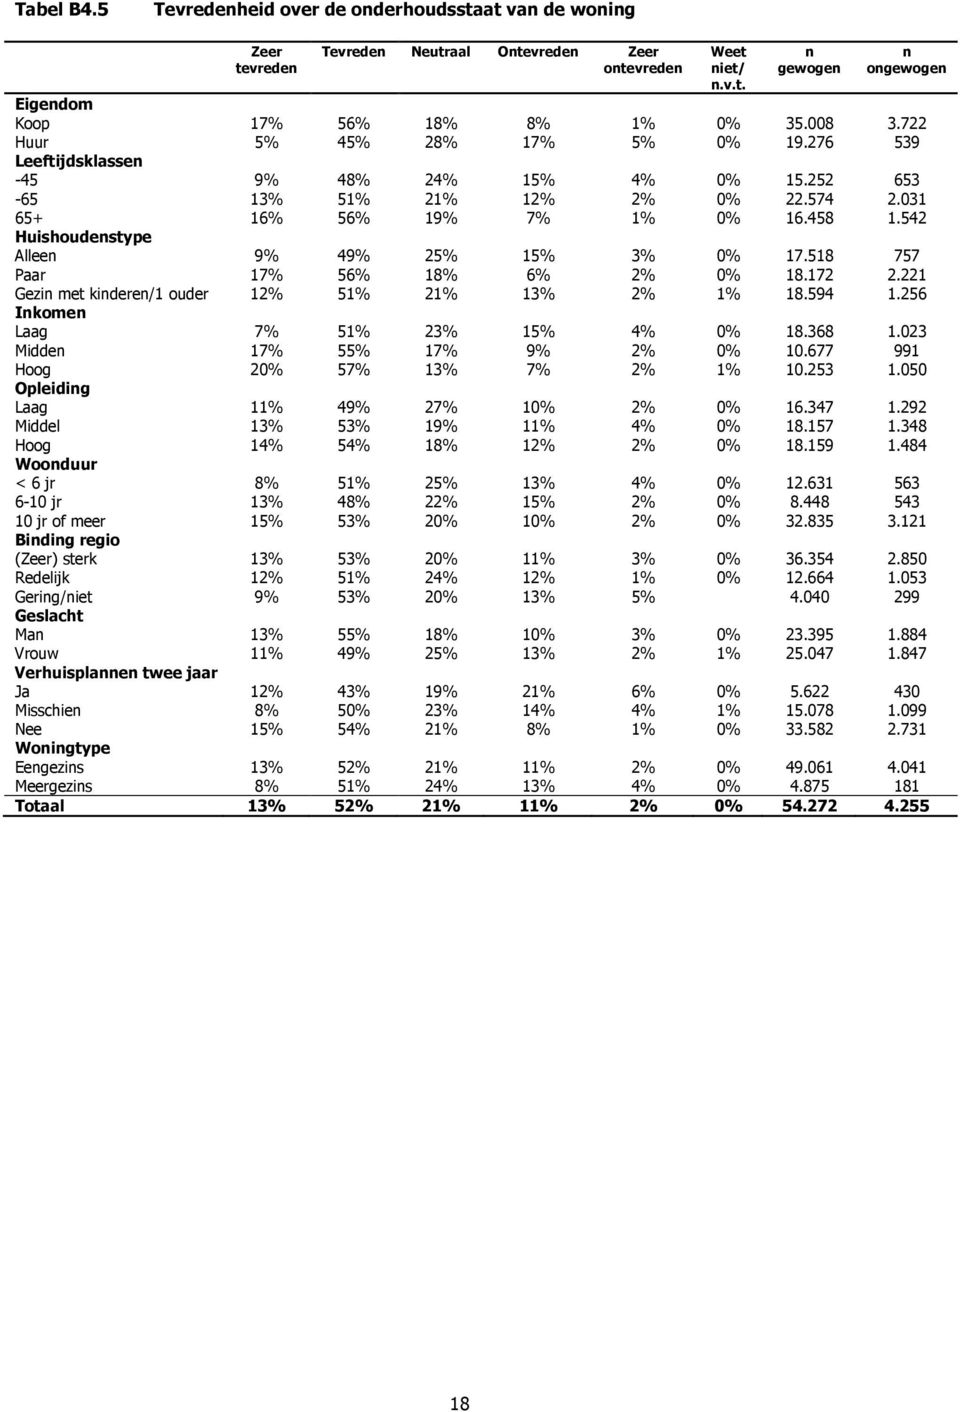 542 Huishoudestype Allee 9% 49% 25% 15% 3% 0% 17.518 757 Paar 17% 56% 18% 6% 2% 0% 18.172 2.221 Gezi met kidere/1 ouder 12% 51% 21% 13% 2% 1% 18.594 1.256 Ikome Laag 7% 51% 23% 15% 4% 0% 18.368 1.